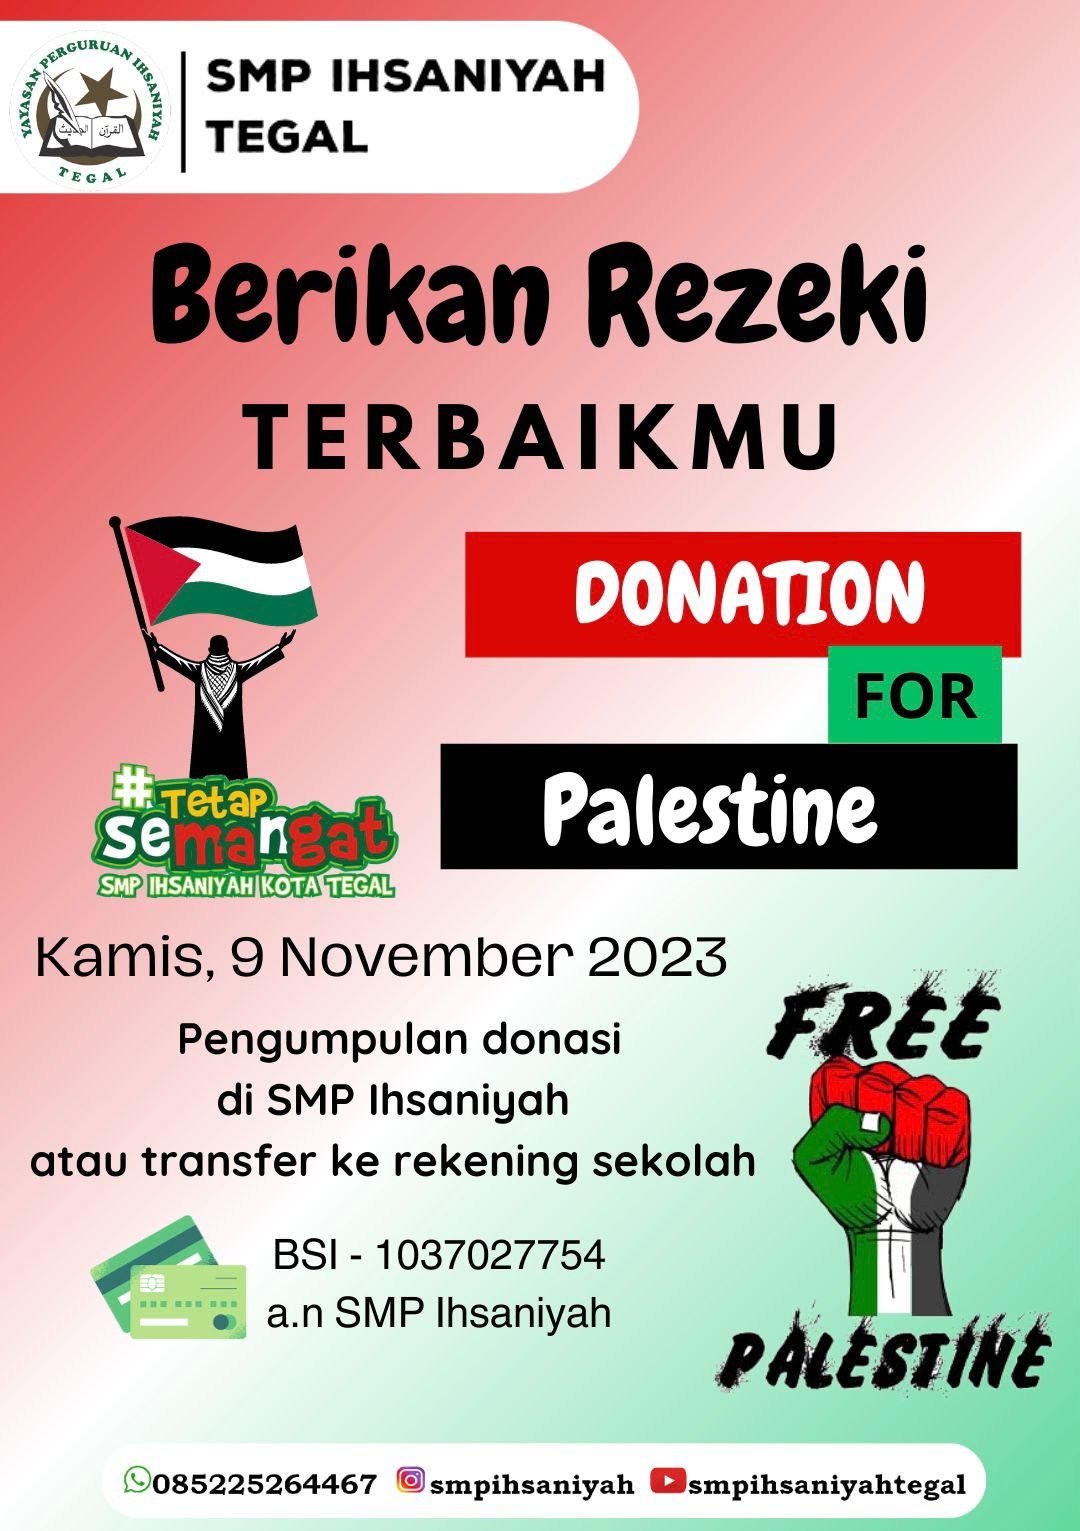 SMP Ihsaniyah Tegal Galang Donasi untuk Palestina